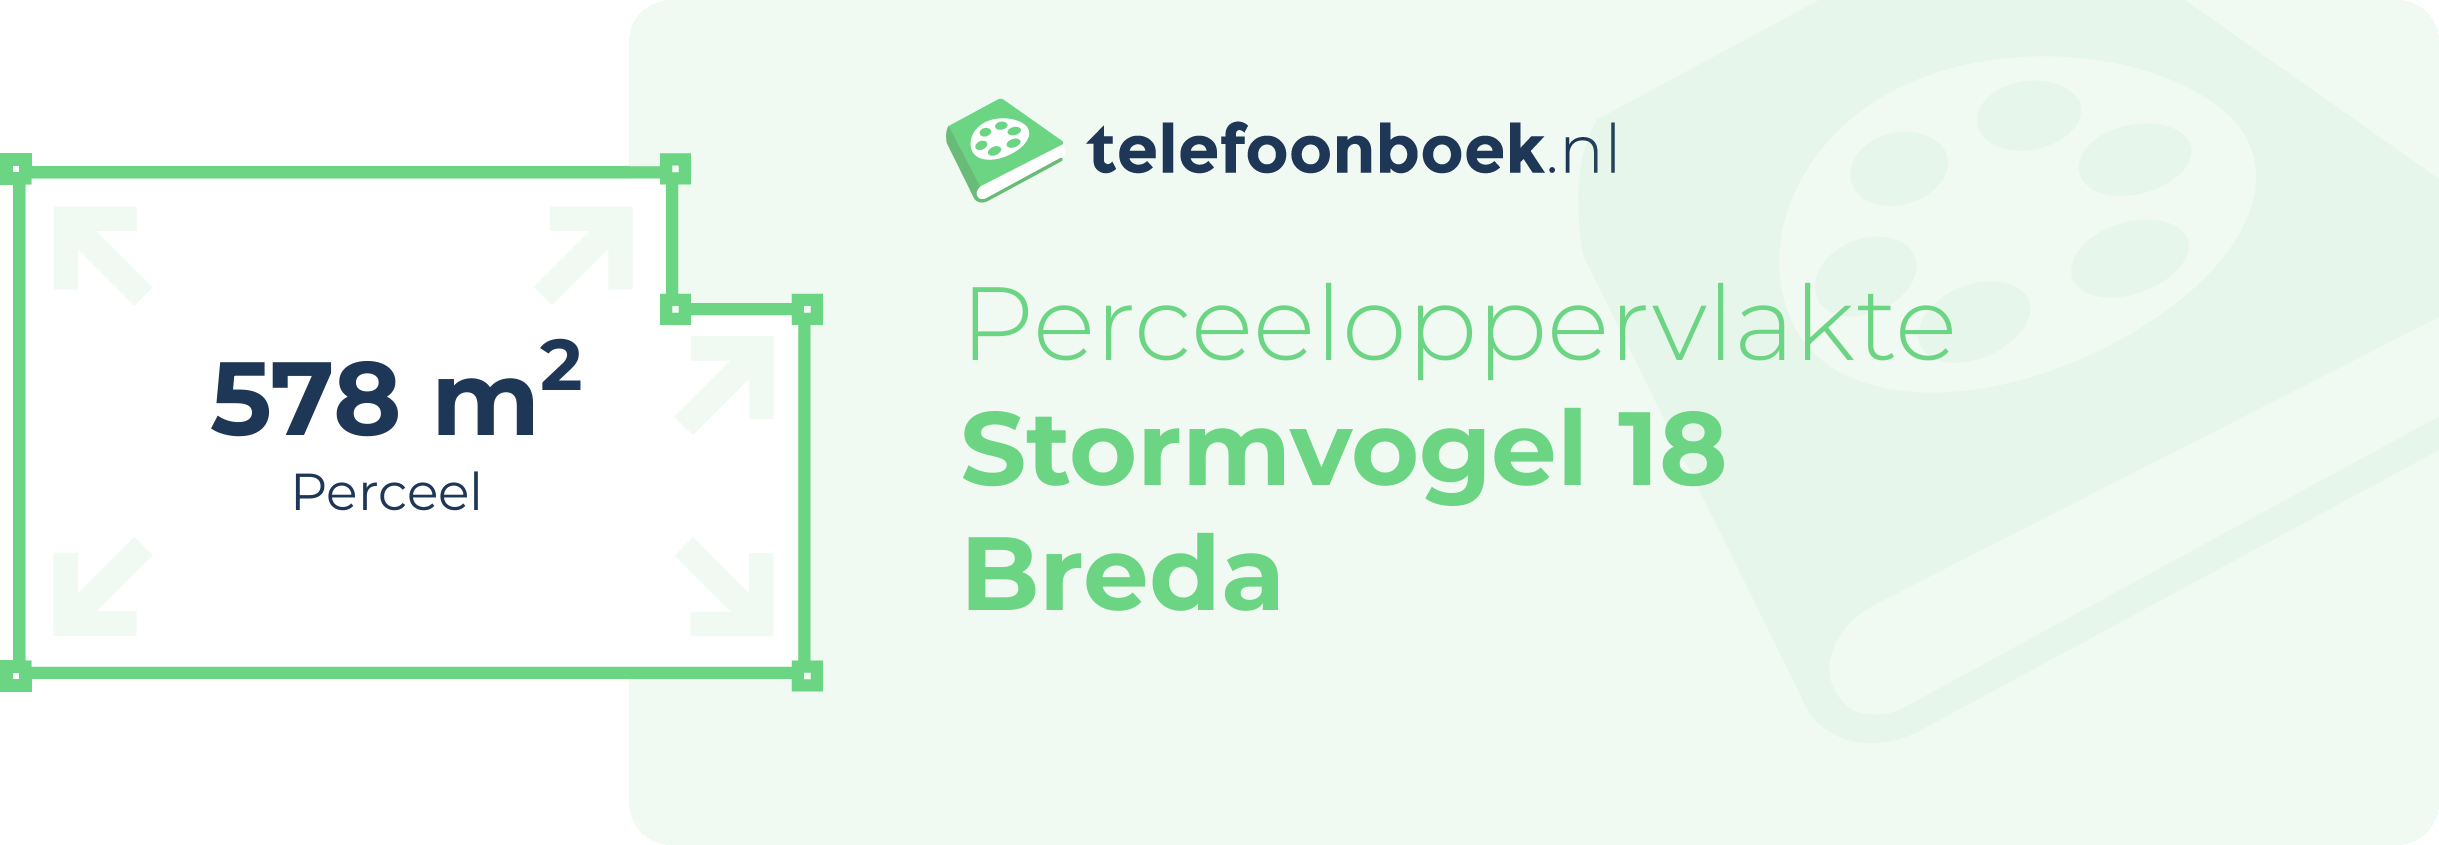 Perceeloppervlakte Stormvogel 18 Breda